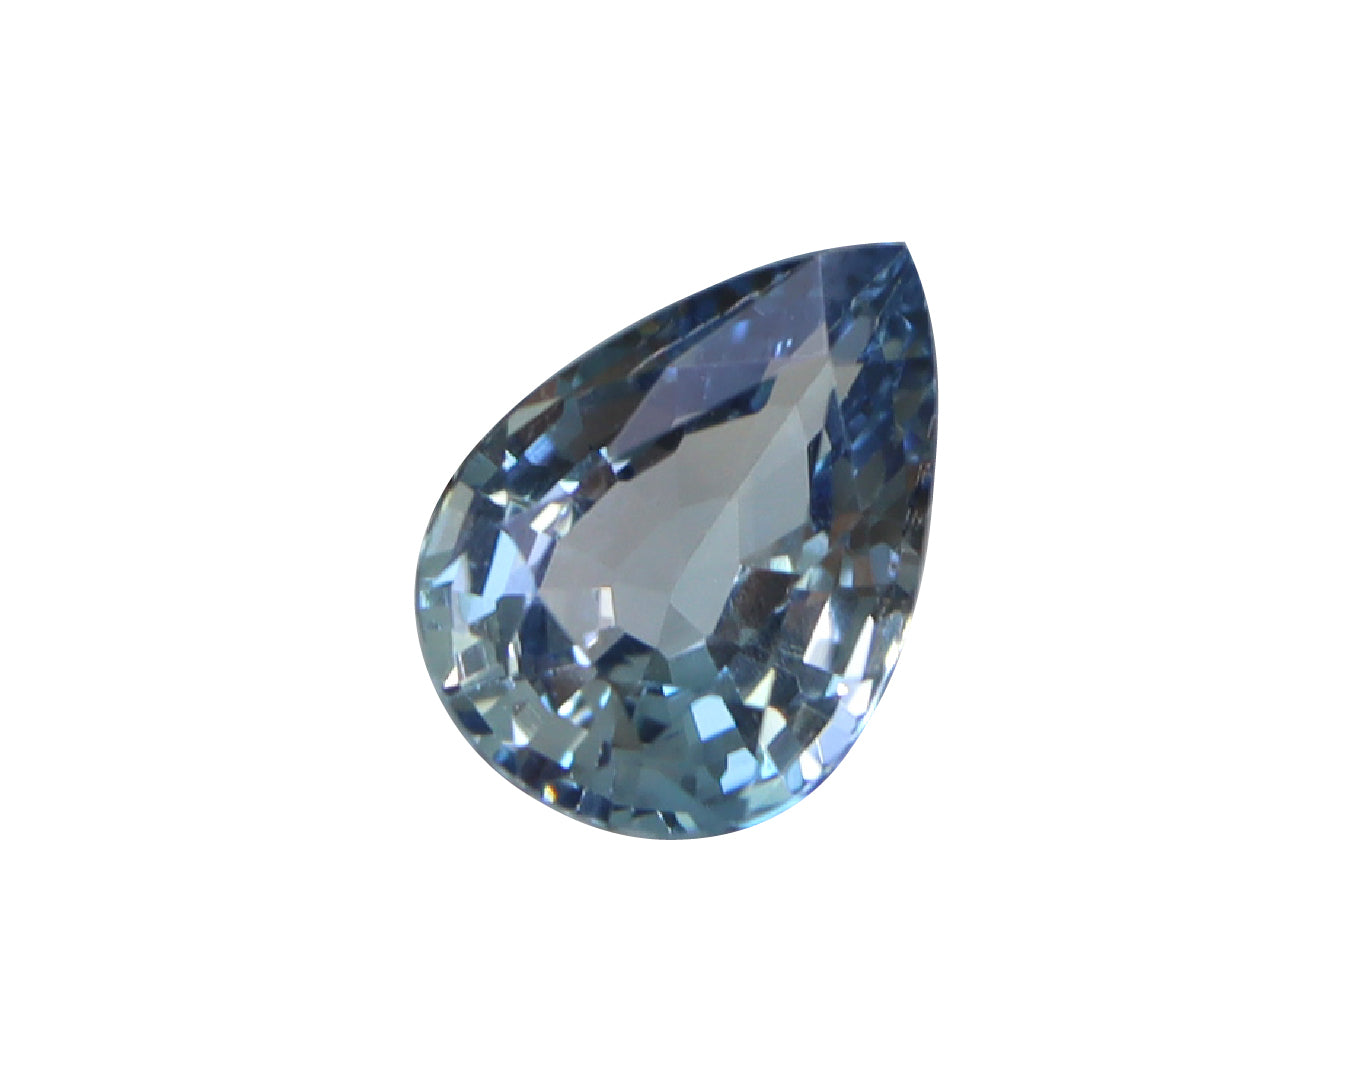 Piedra Zafiro Azul 0.98cts S-1838